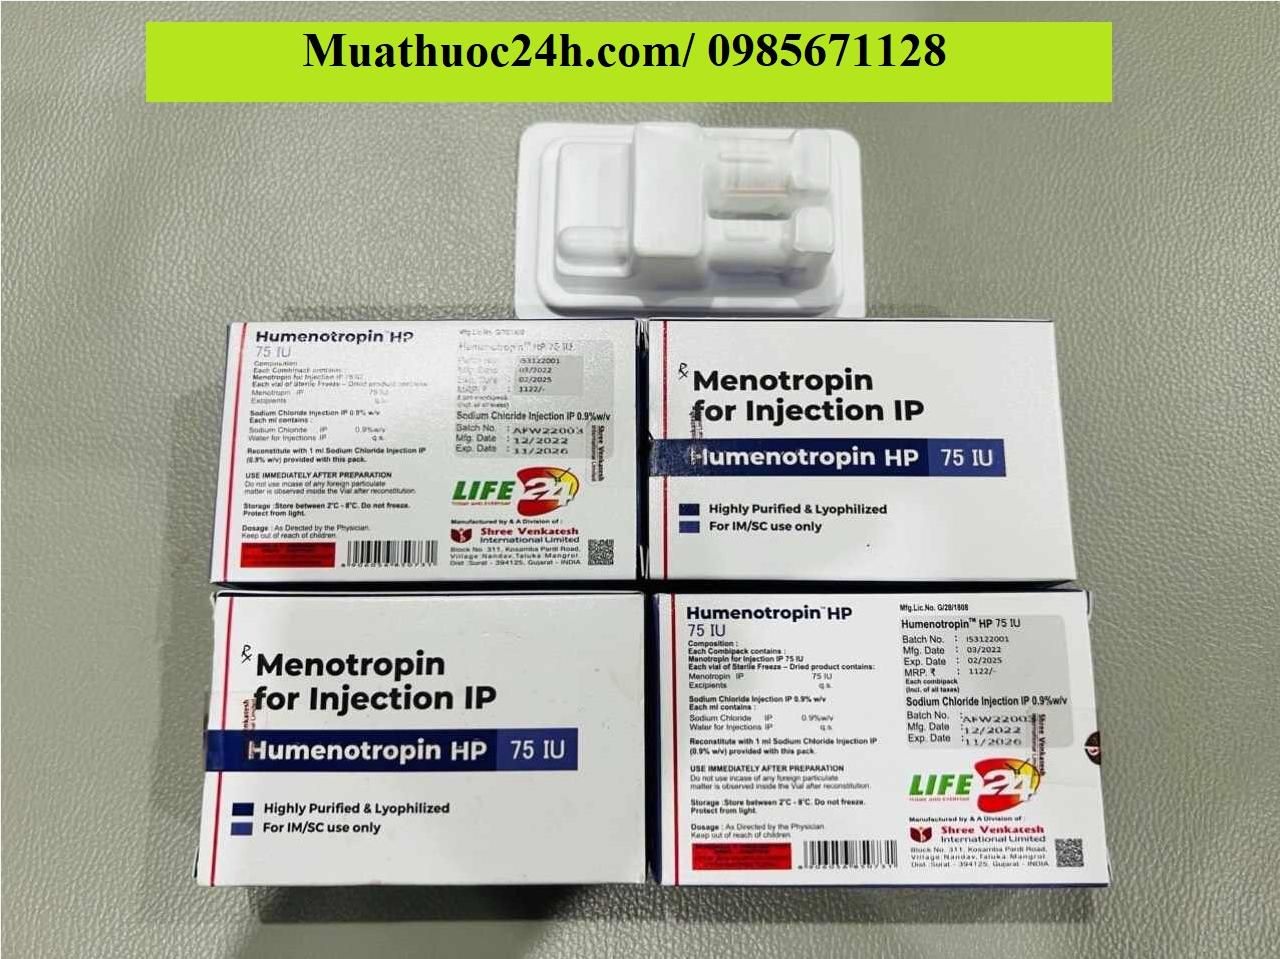 Thuốc Humenotropin HP 75 IU Menotropin giá bao nhiêu mua ở đâu